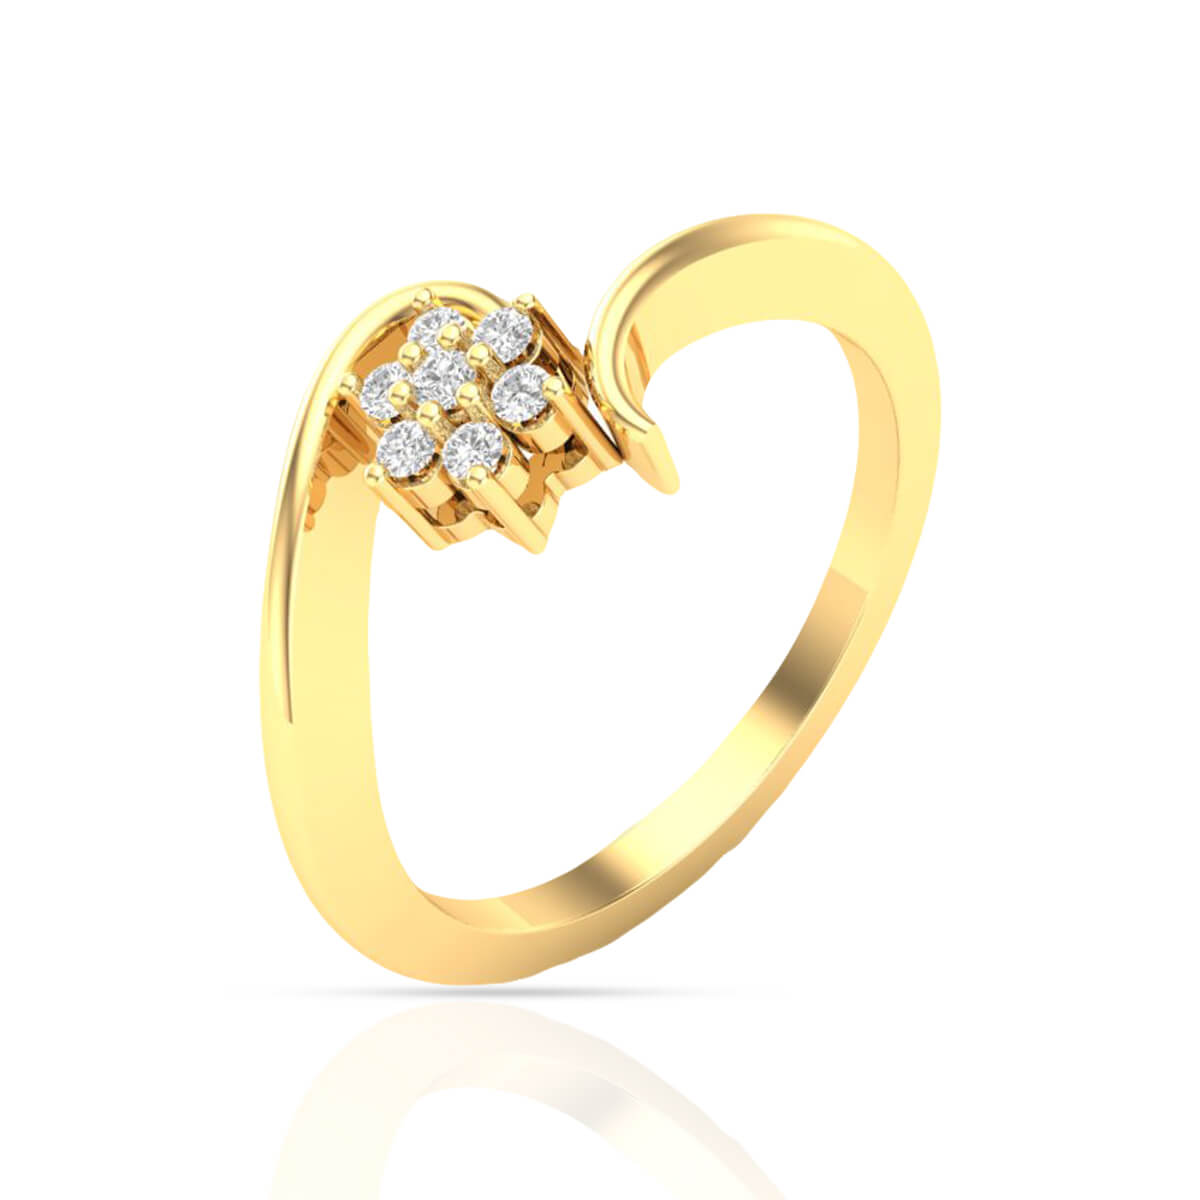 Gold ring design | Fancy jewellery designs, Fancy jewellery, Fancy jewelry-saigonsouth.com.vn